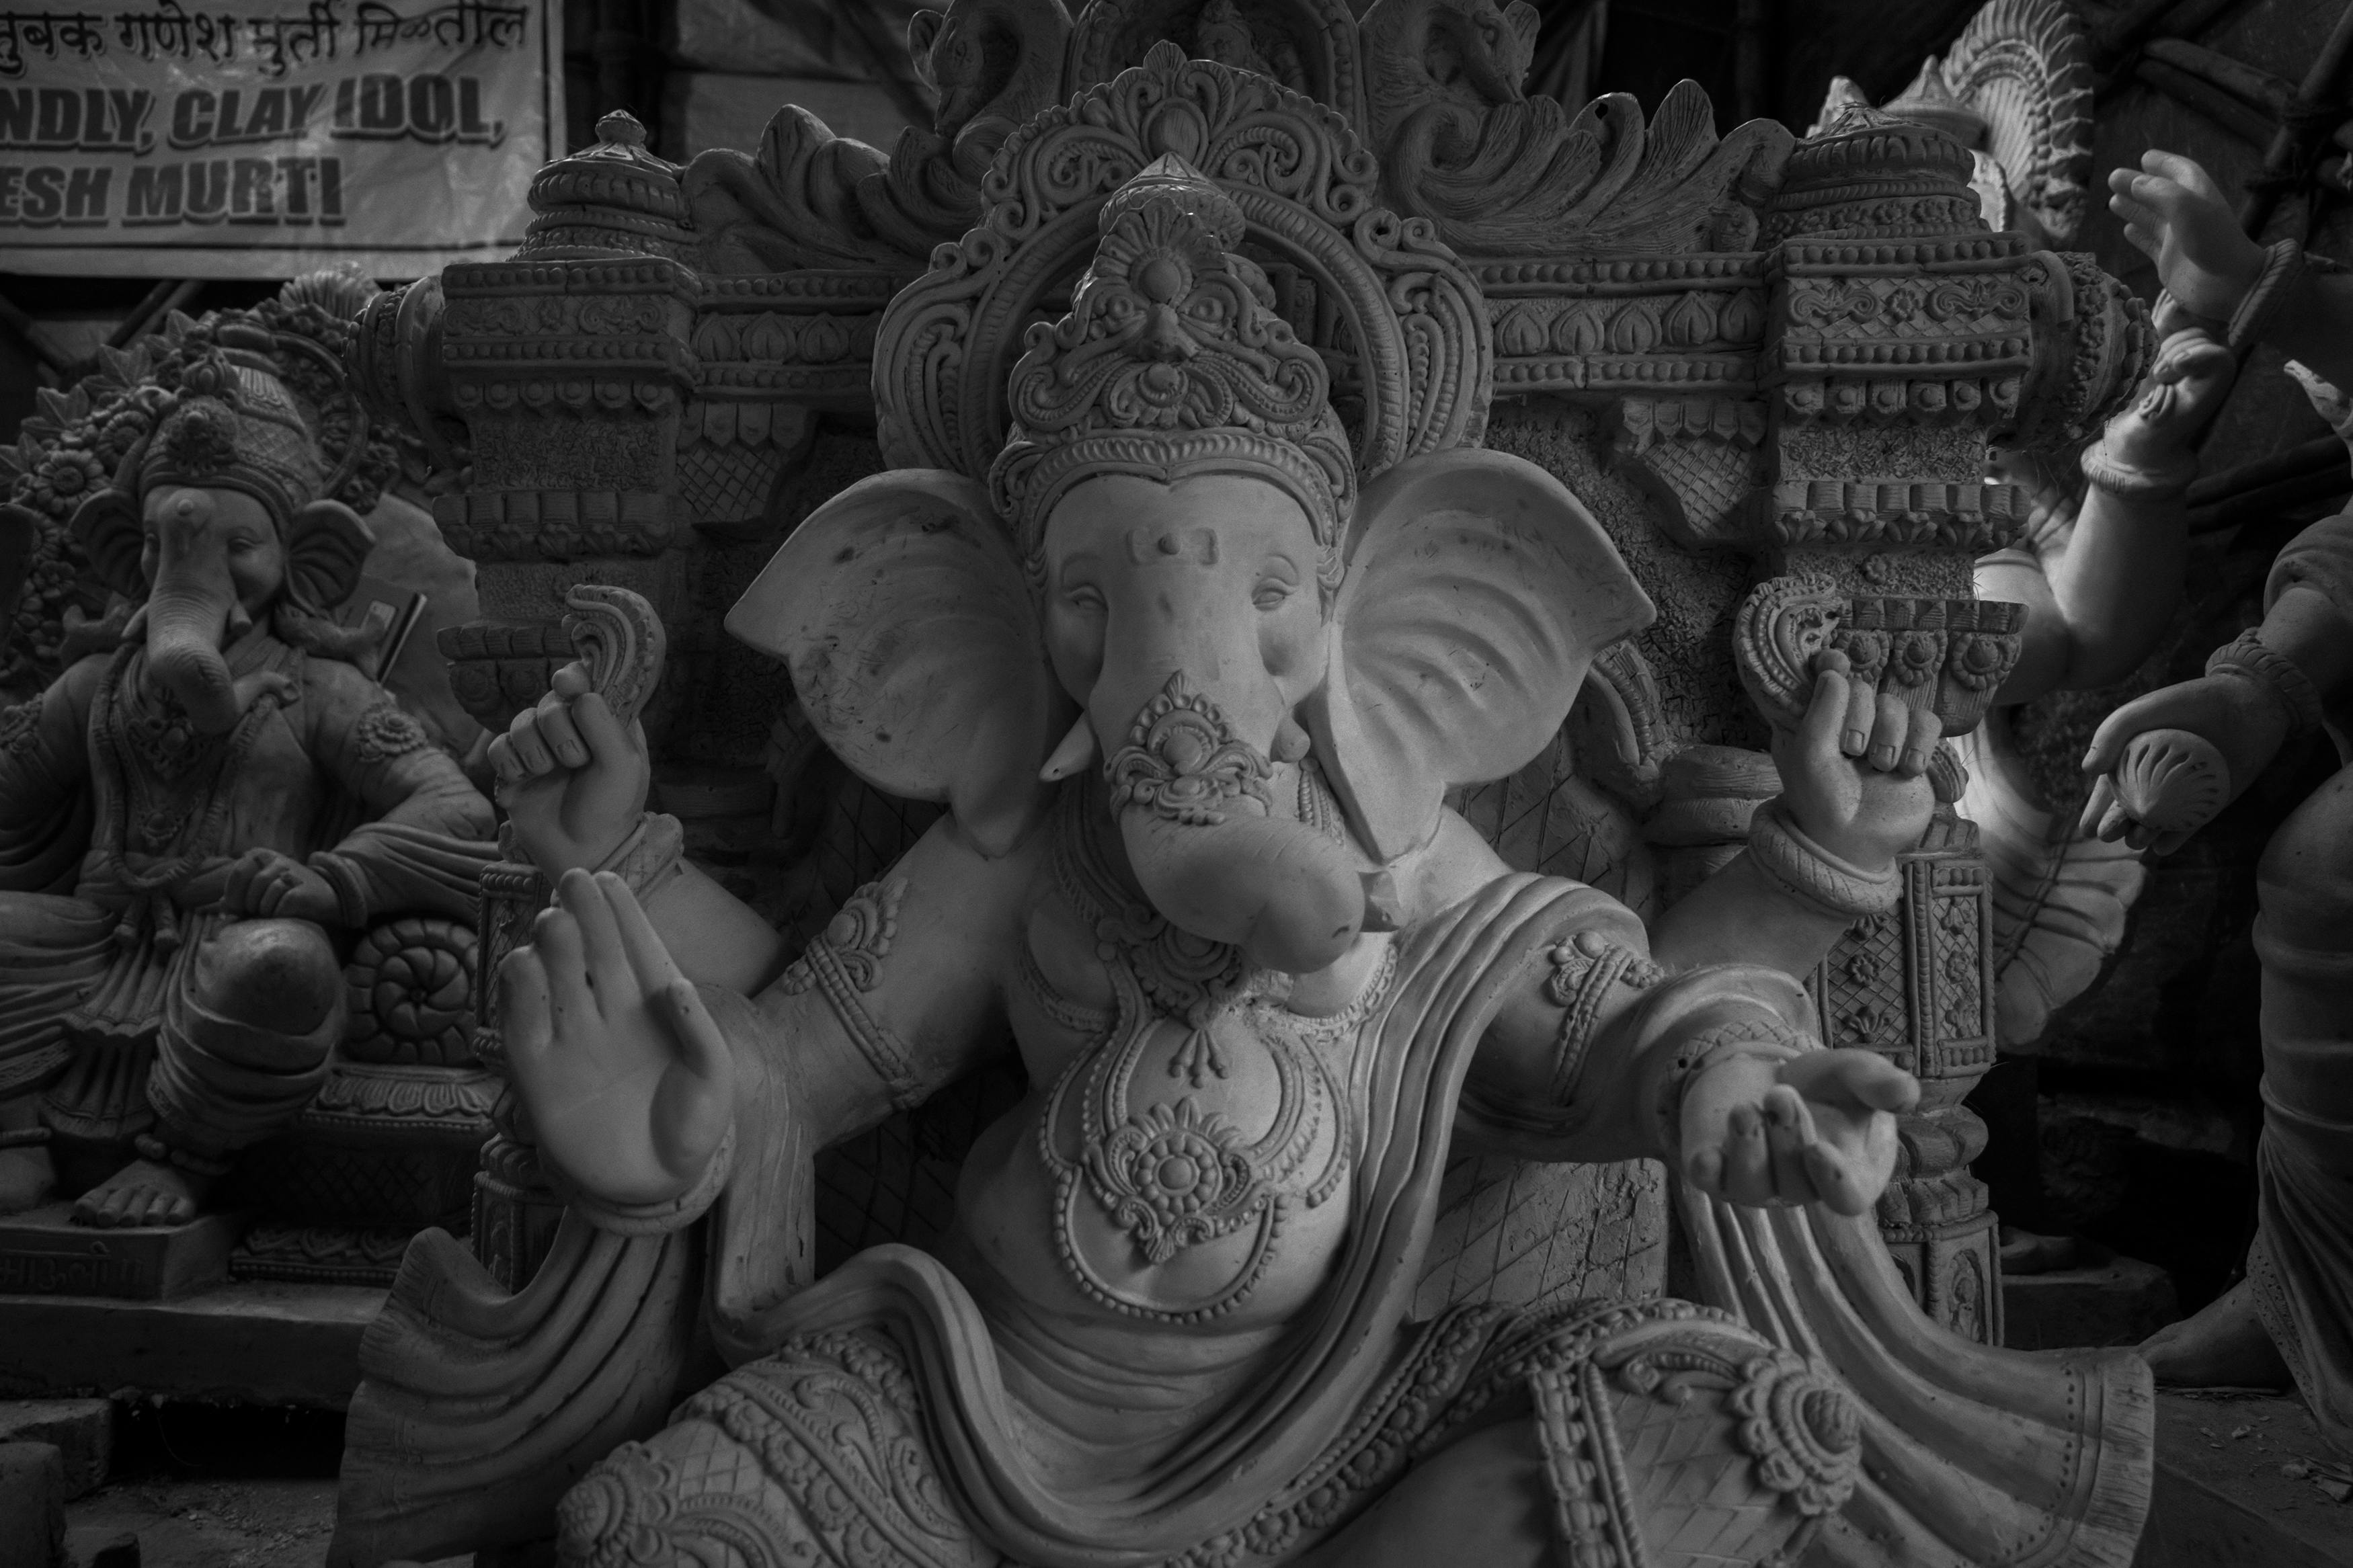 Ganesha Photos, Download The BEST Free Ganesha Stock Photos & HD Images